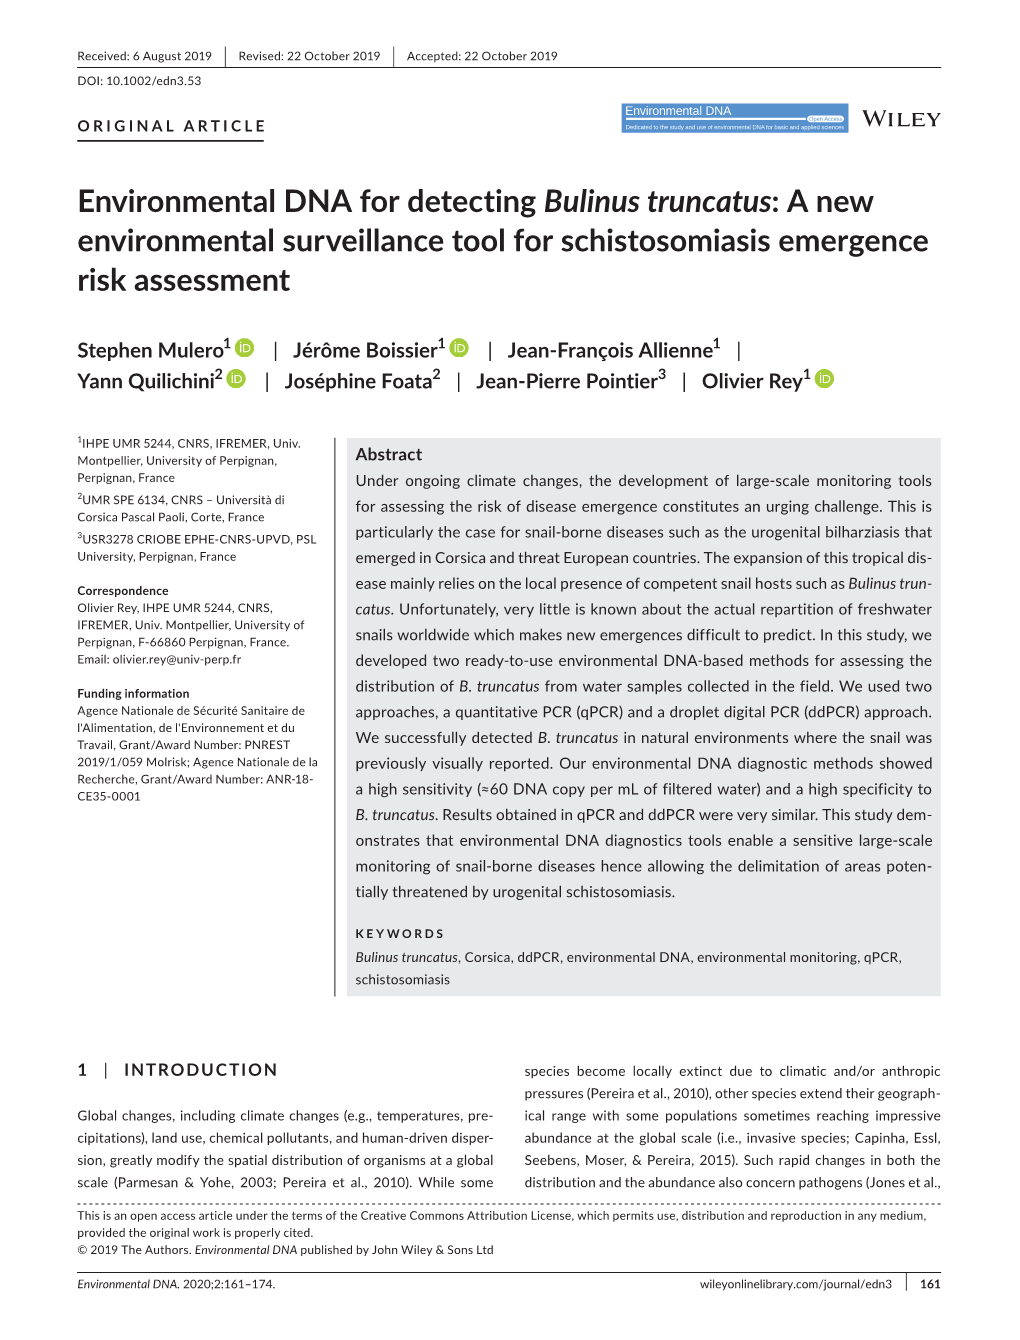 Environmental DNA for Detecting Bulinus Truncatus: a New Environmental Surveillance Tool for Schistosomiasis Emergence Risk Assessment